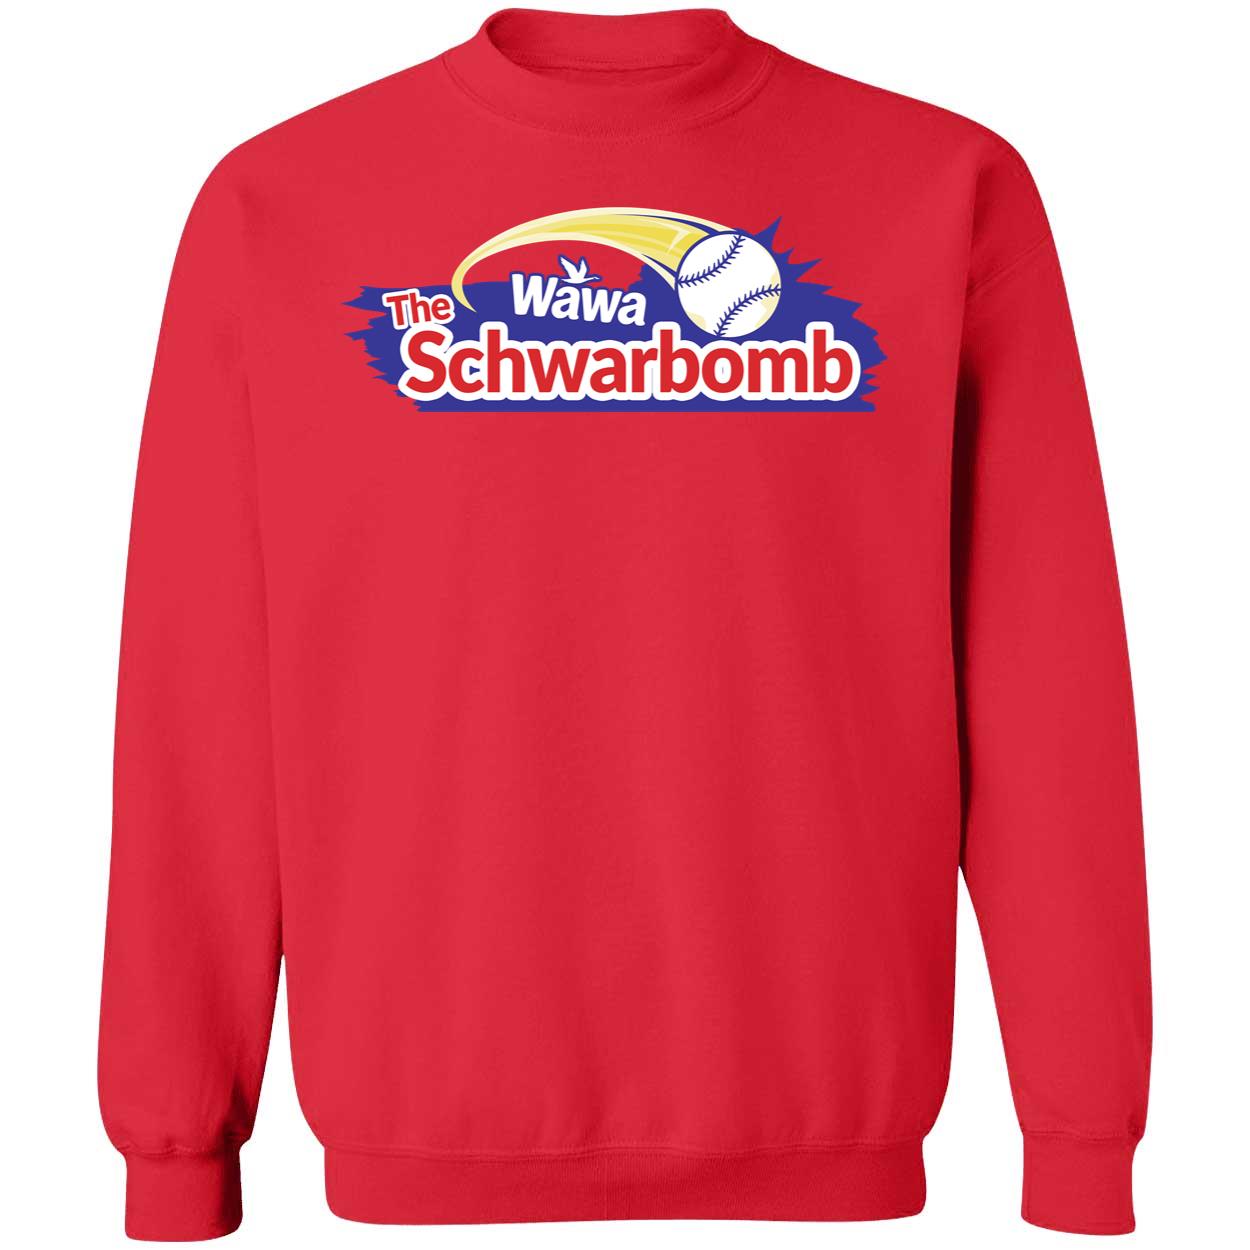 Kyle Schwarber WAWA The schwarbomb Shirt